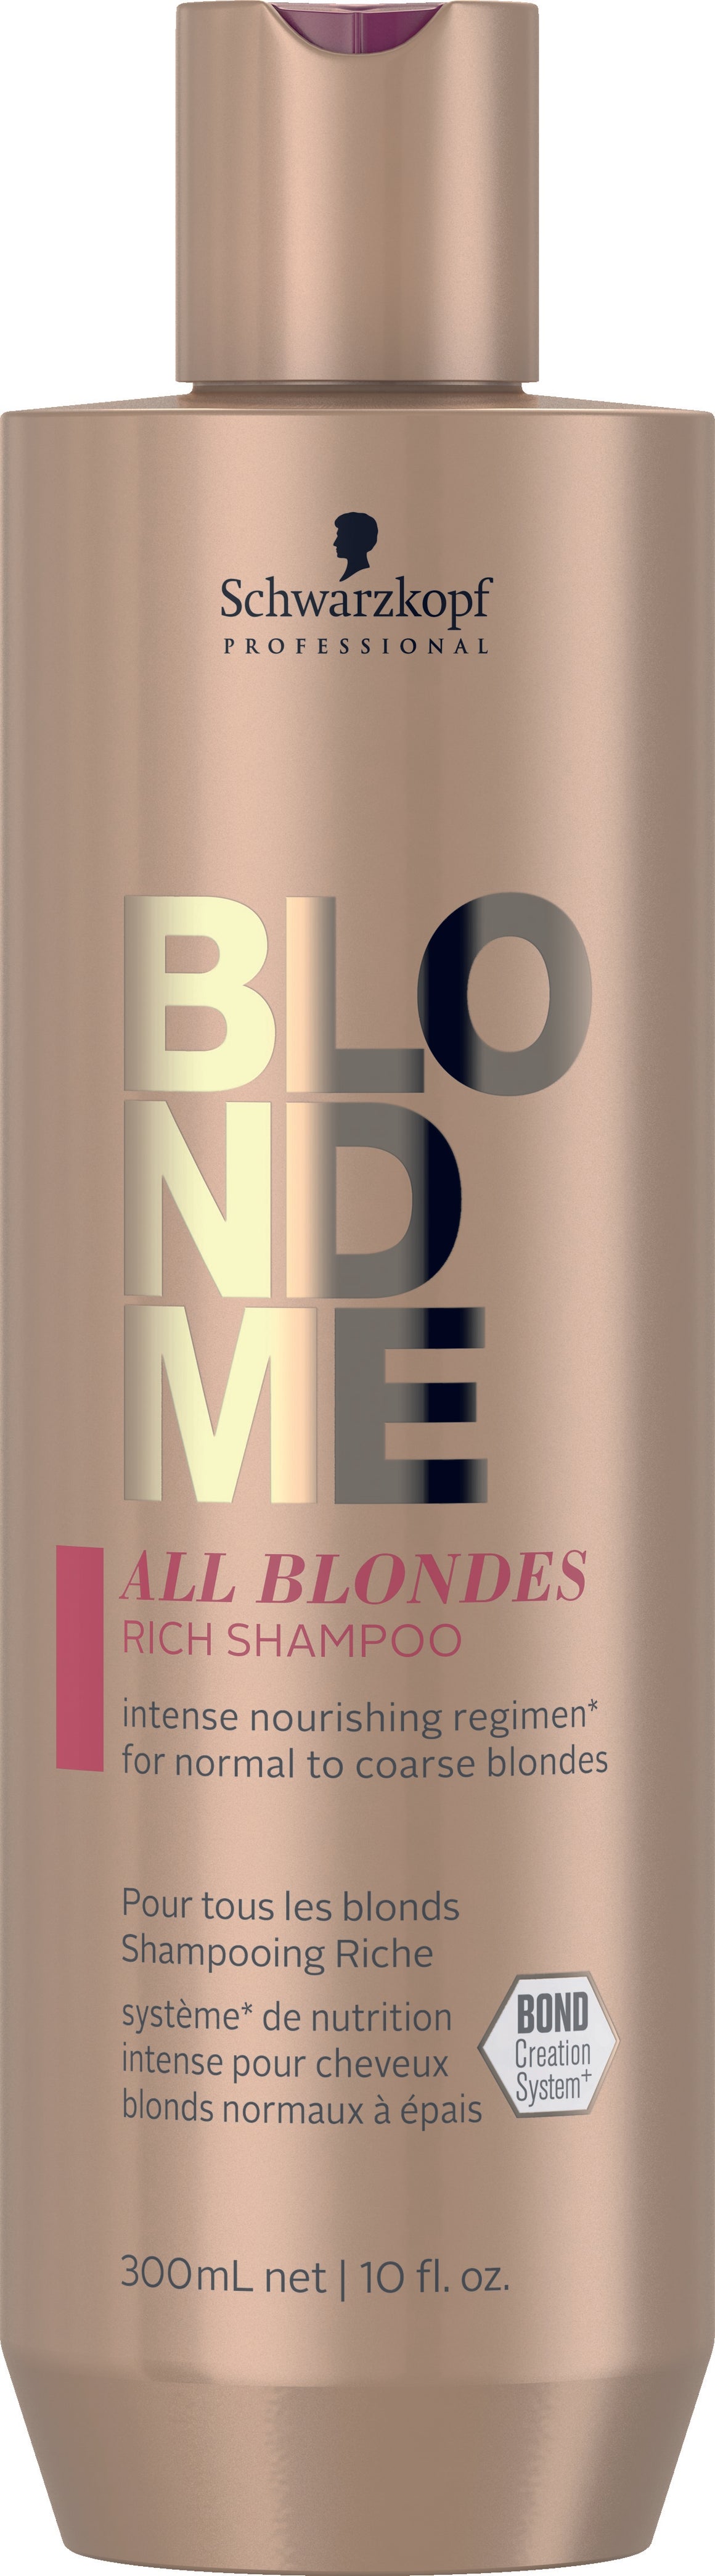 Schwarzkopf Professional BlondMe All Blondes Rich Shampoo 300ml at Eds Hair Bramhall